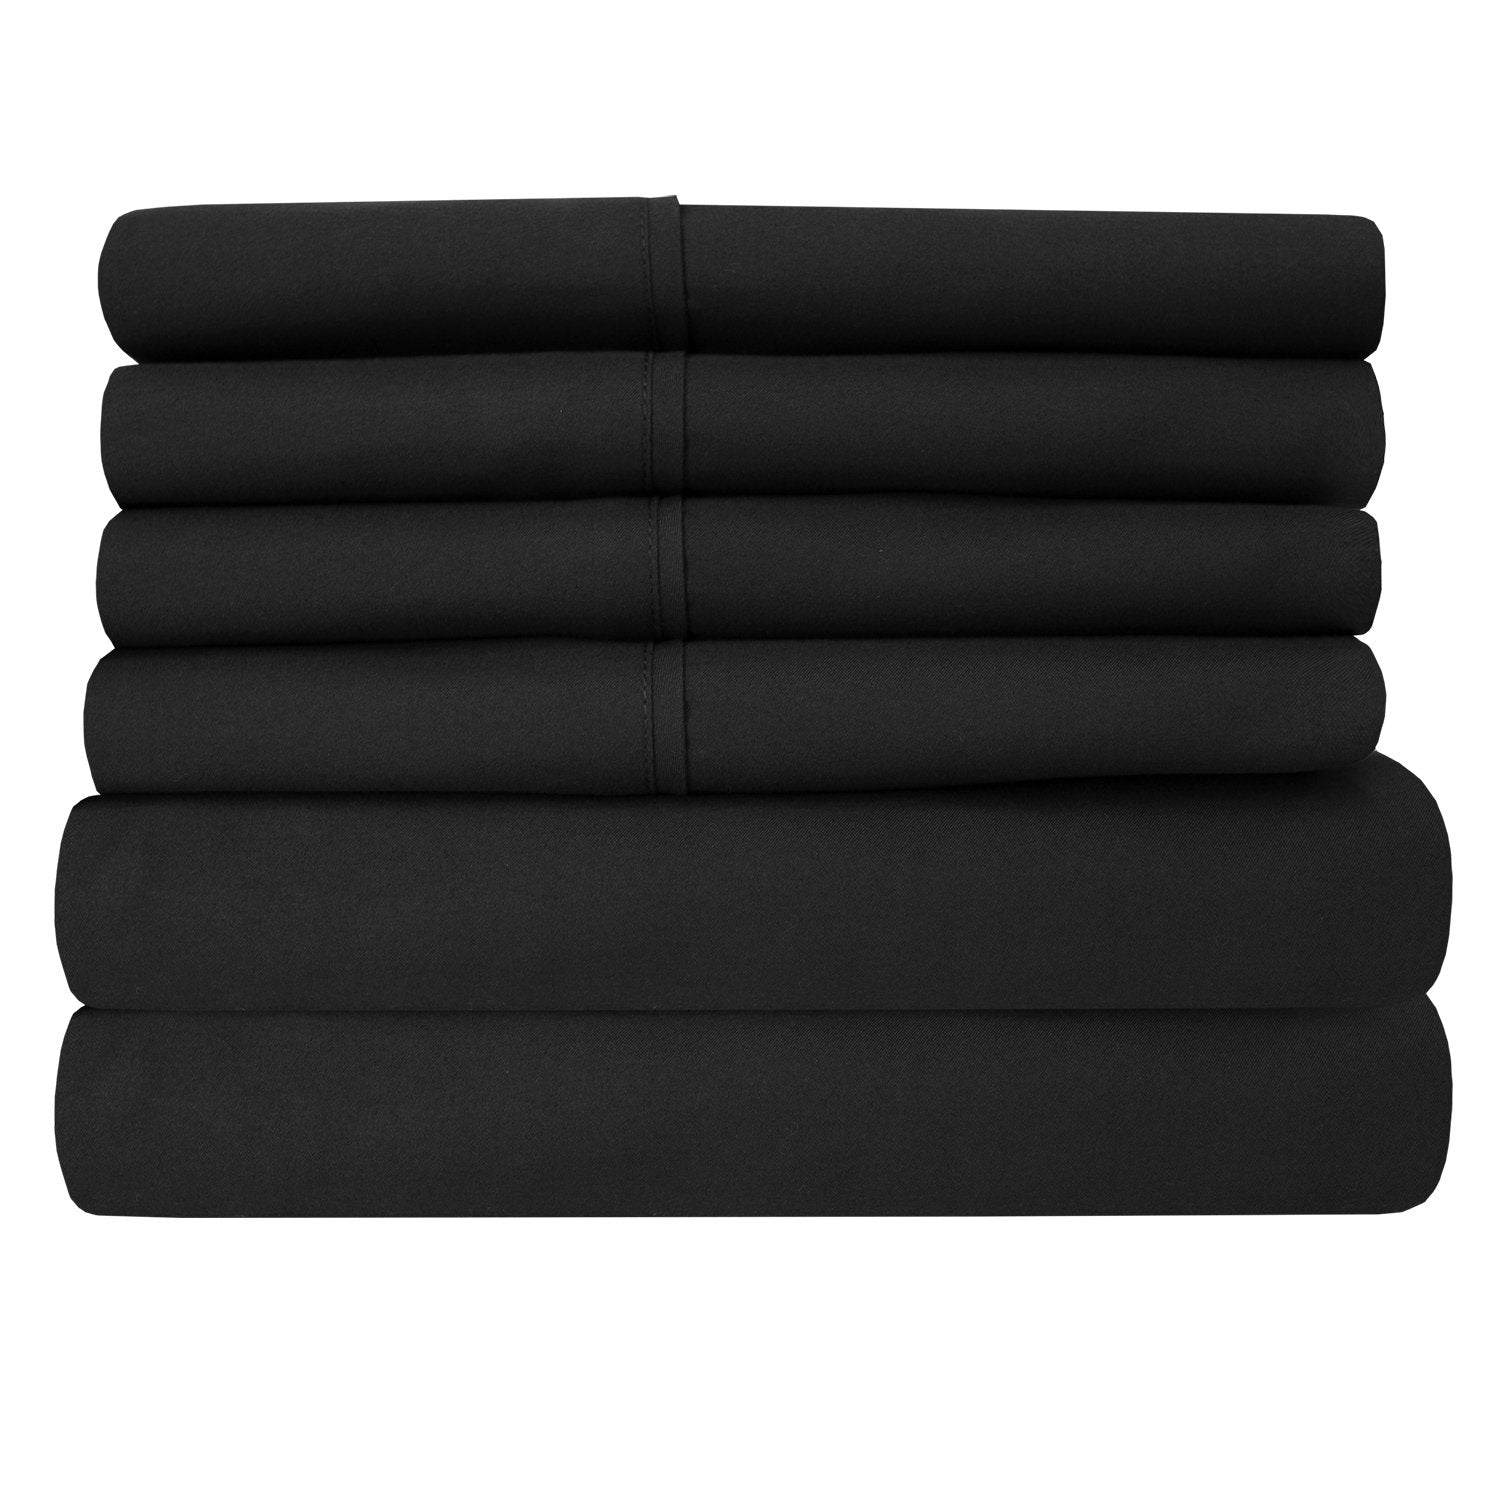 Deluxe 6-Piece Bed Sheet Set (Black) - Folded 2